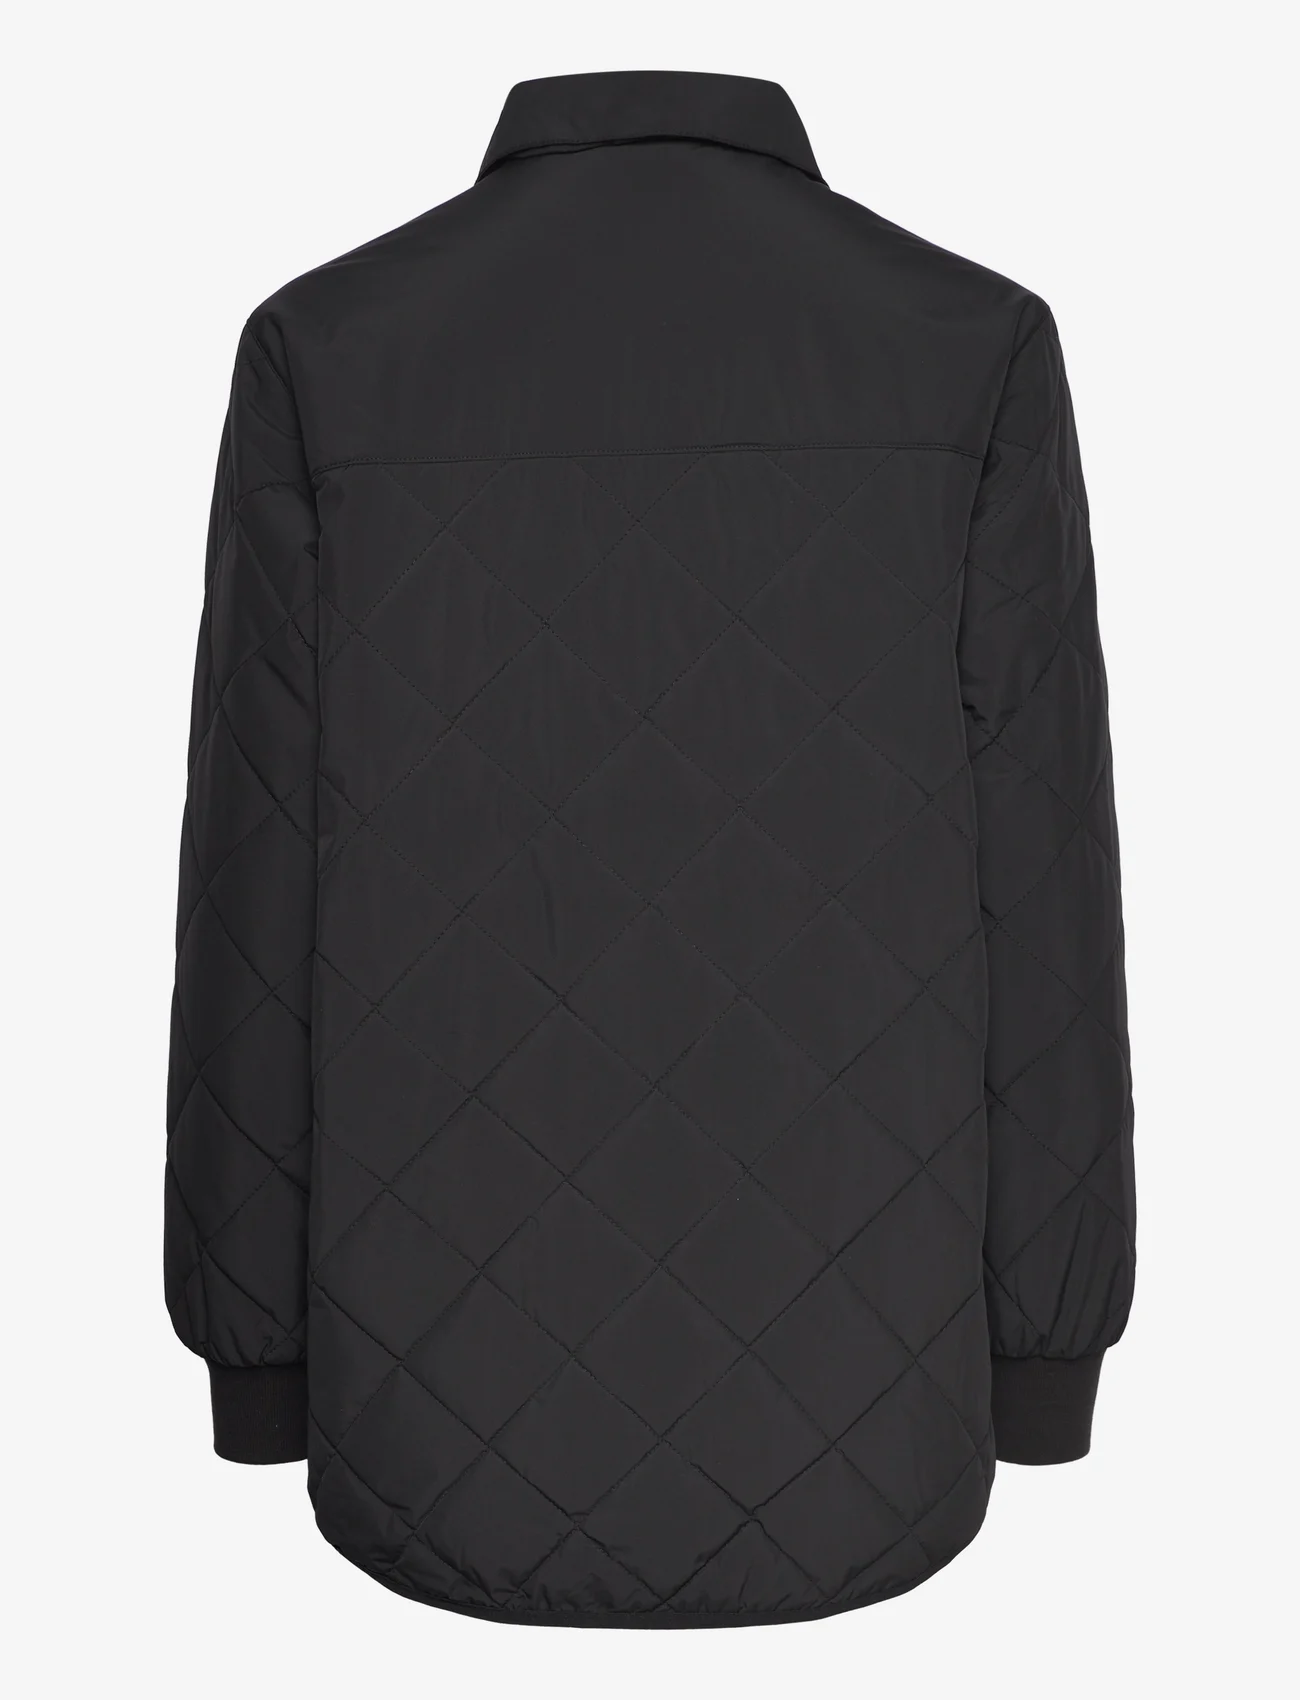 Makia - Nata Jacket - quilted jackets - black - 1